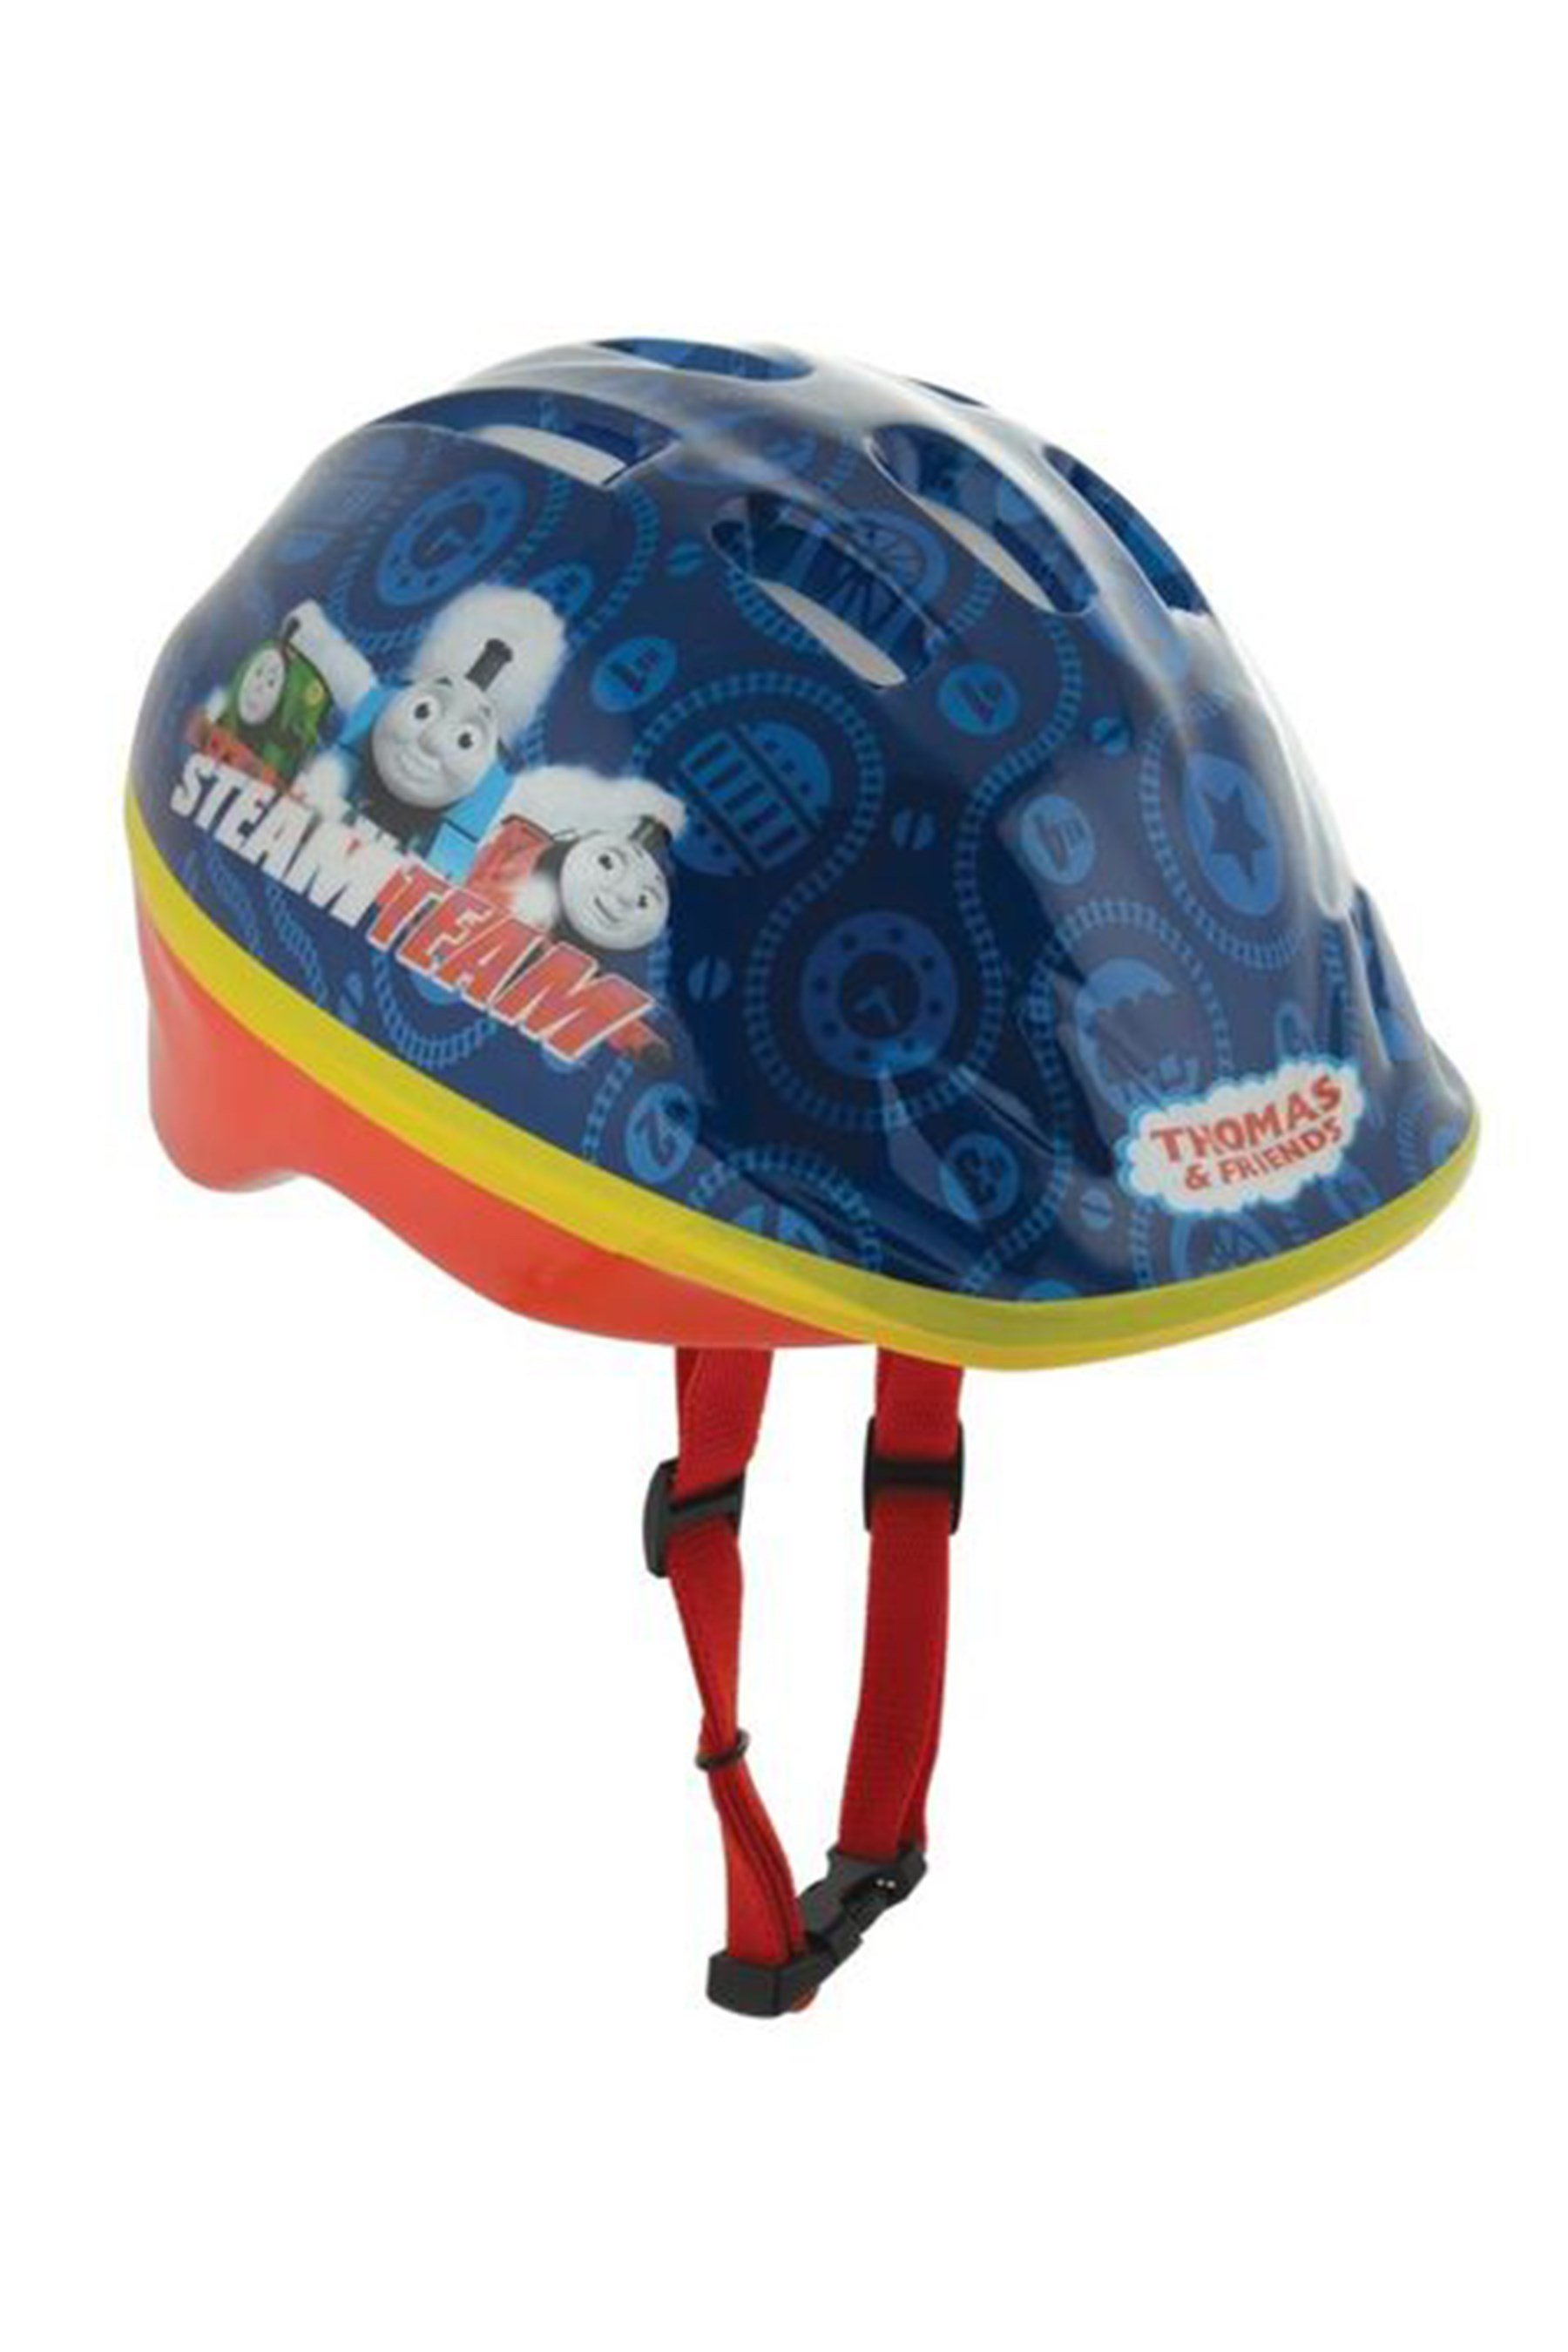 Thomas & Friends Kids Bike Safety Helmet 48-52cm -